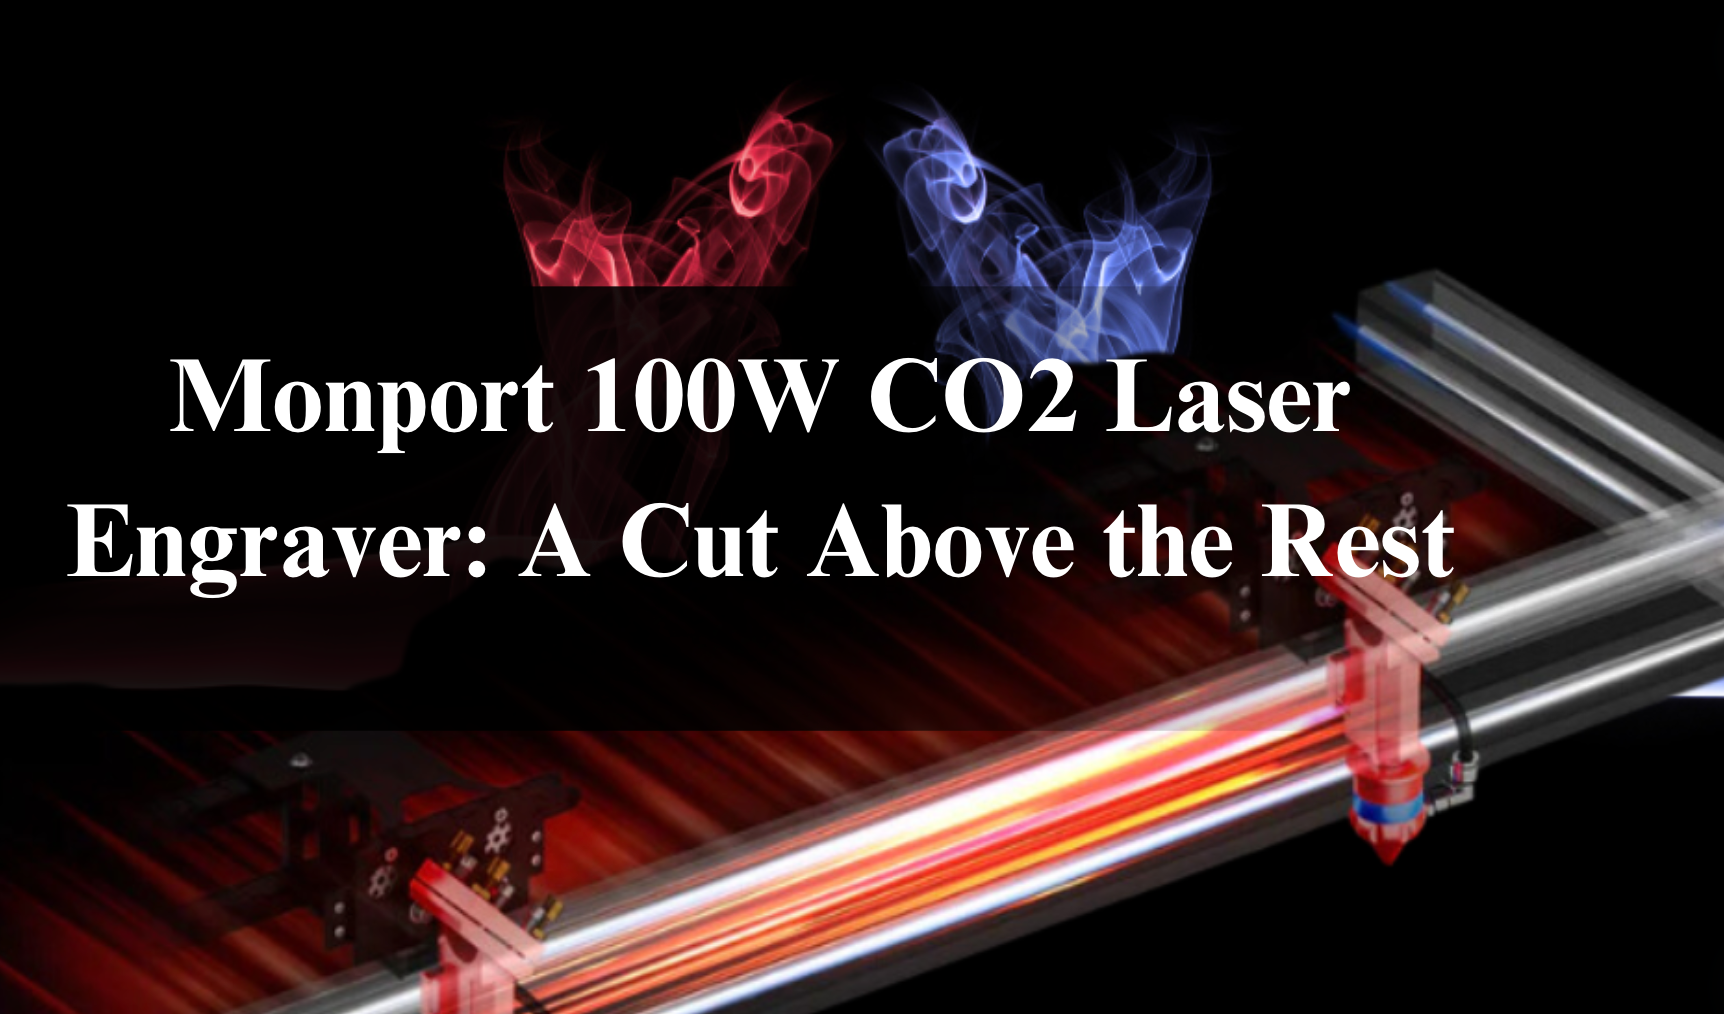 Monport 100W CO2 Laser Engraver: A Cut Above the Rest